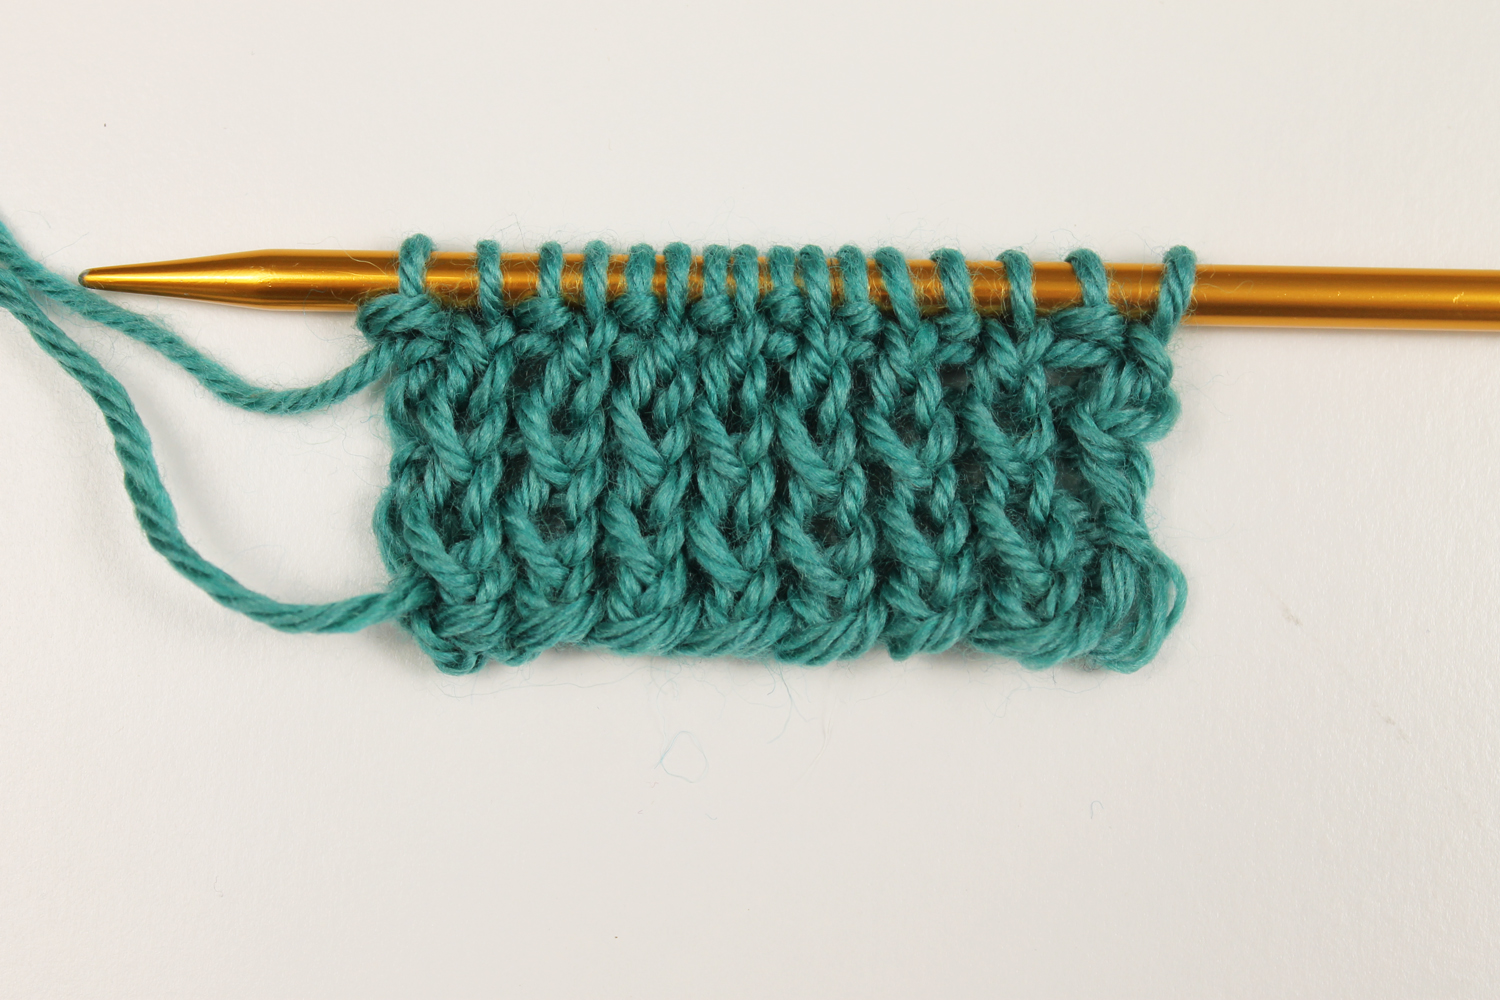 How to Knit Twisted Rib Stitch